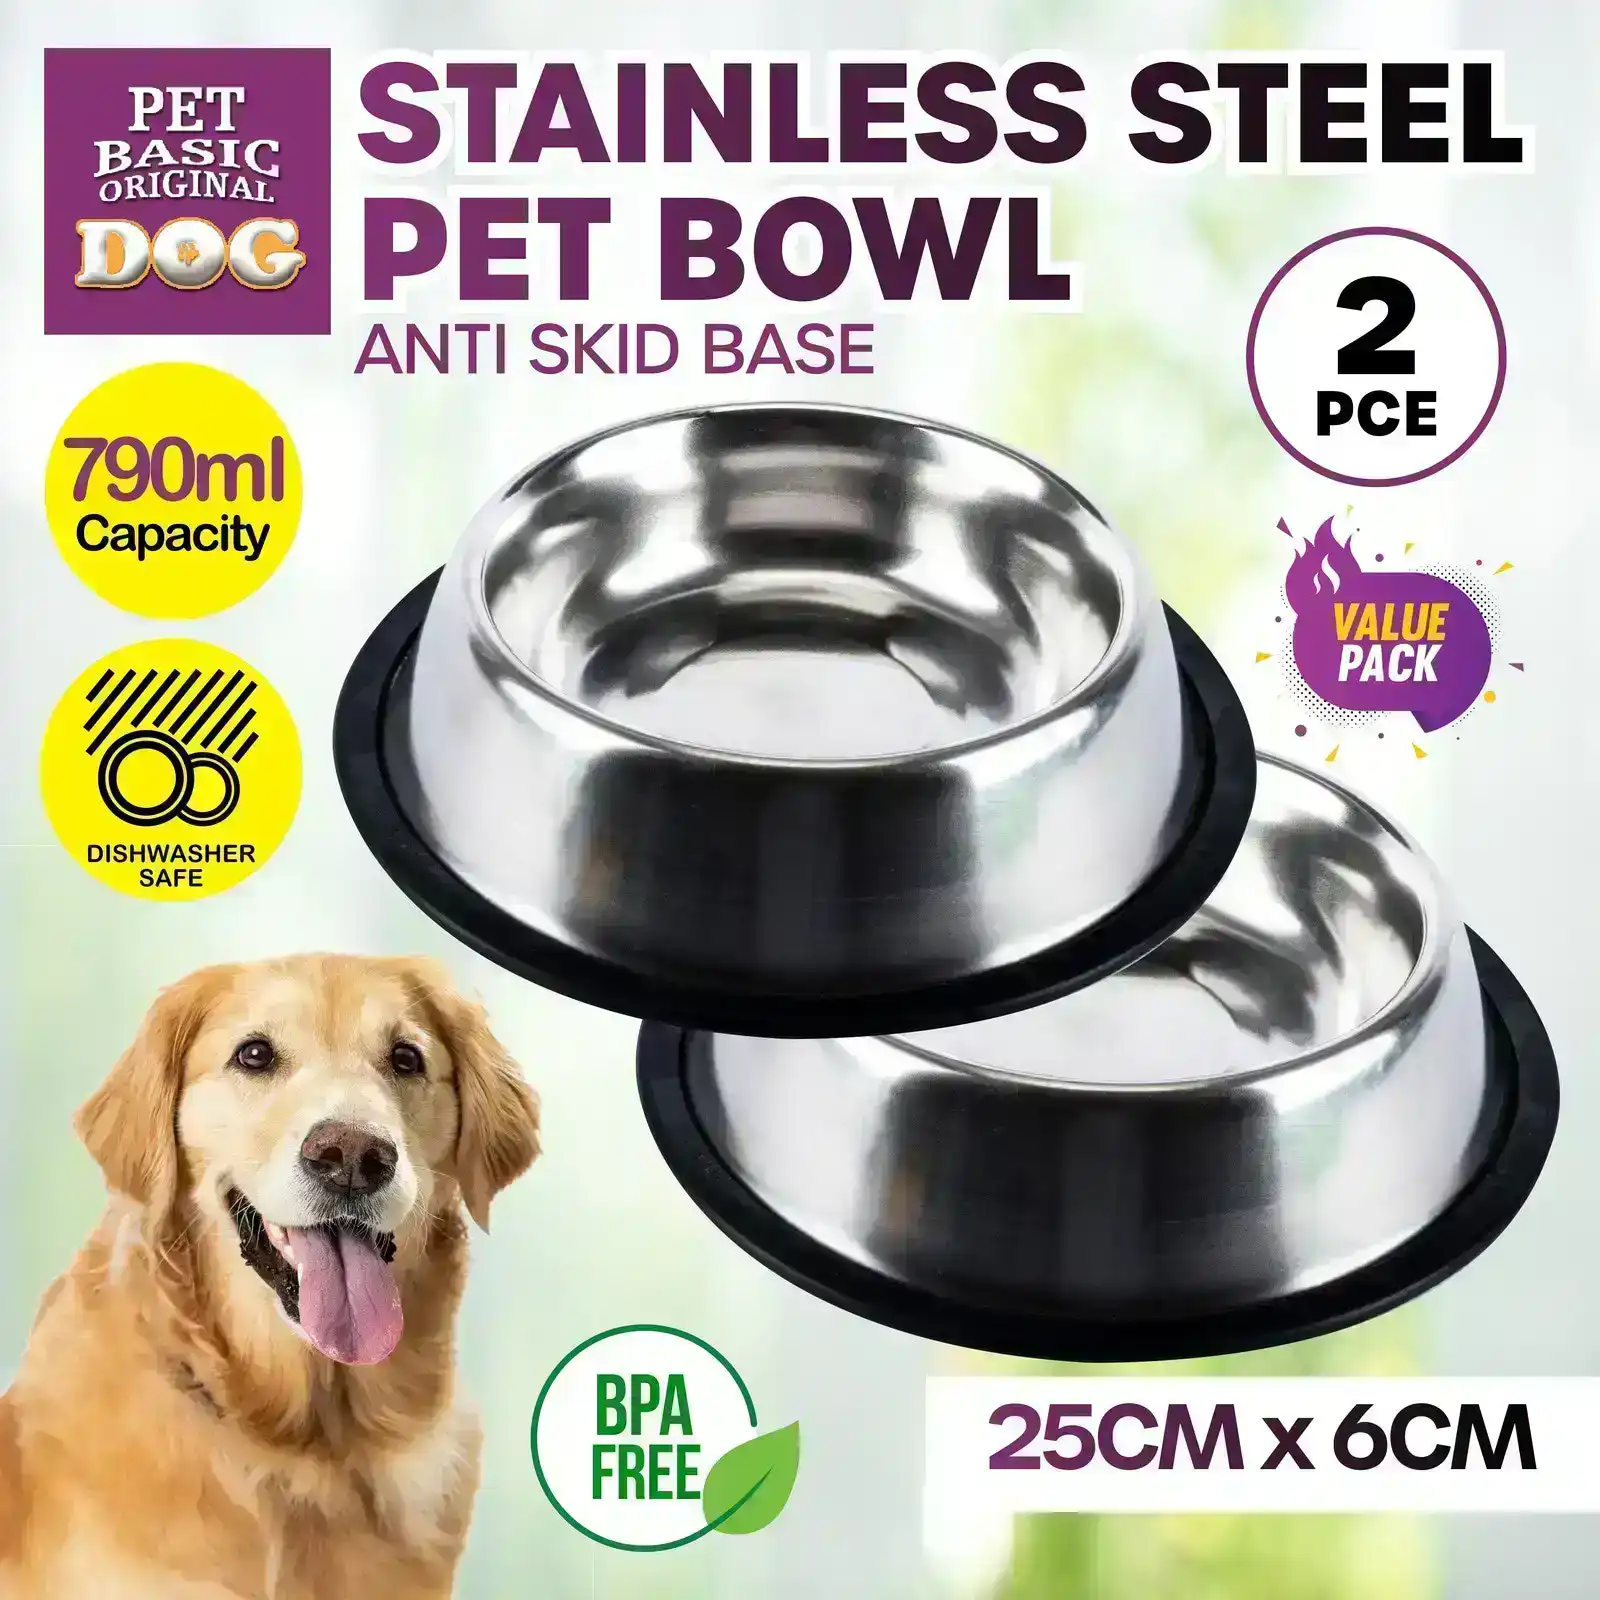 Pet Basic® 2PCE Stainless Steel Pet Bowl Non Slip Base Dishwasher Safe 790ml